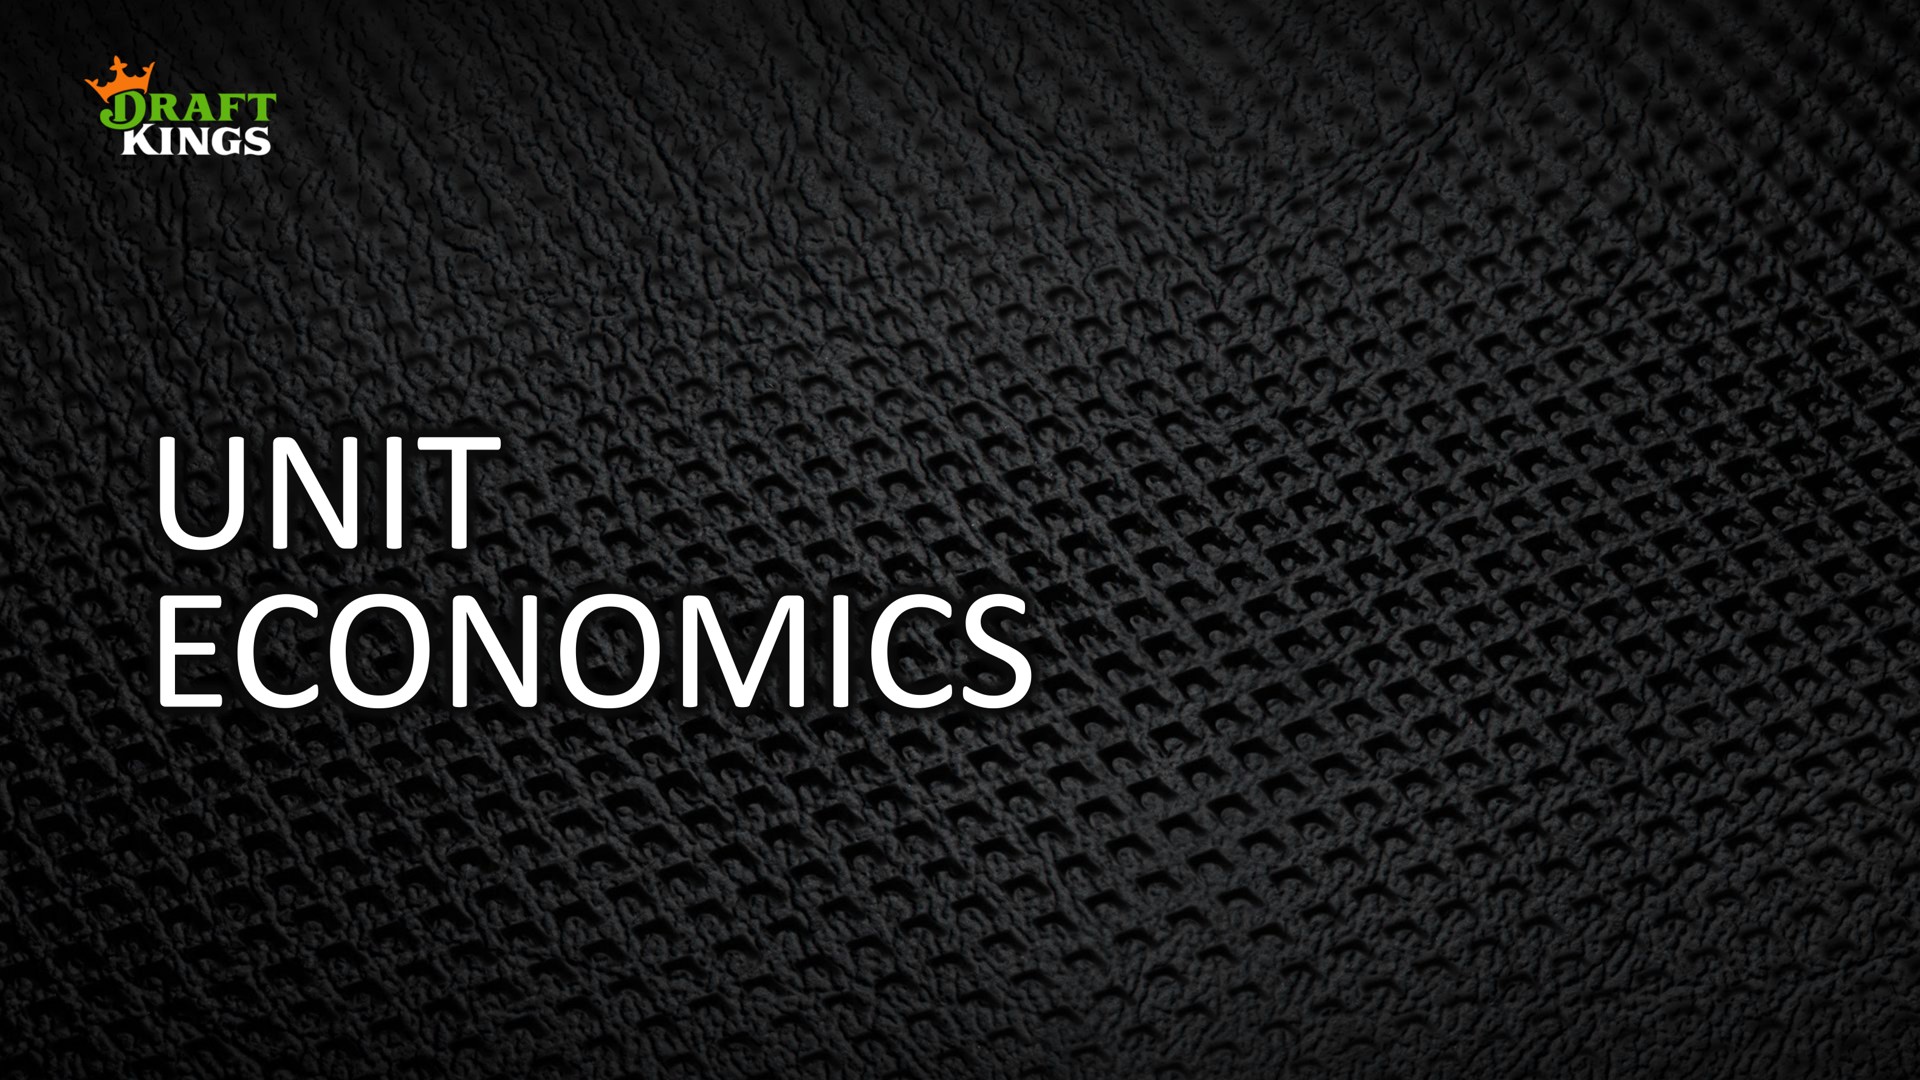 unit economics kings | DraftKings